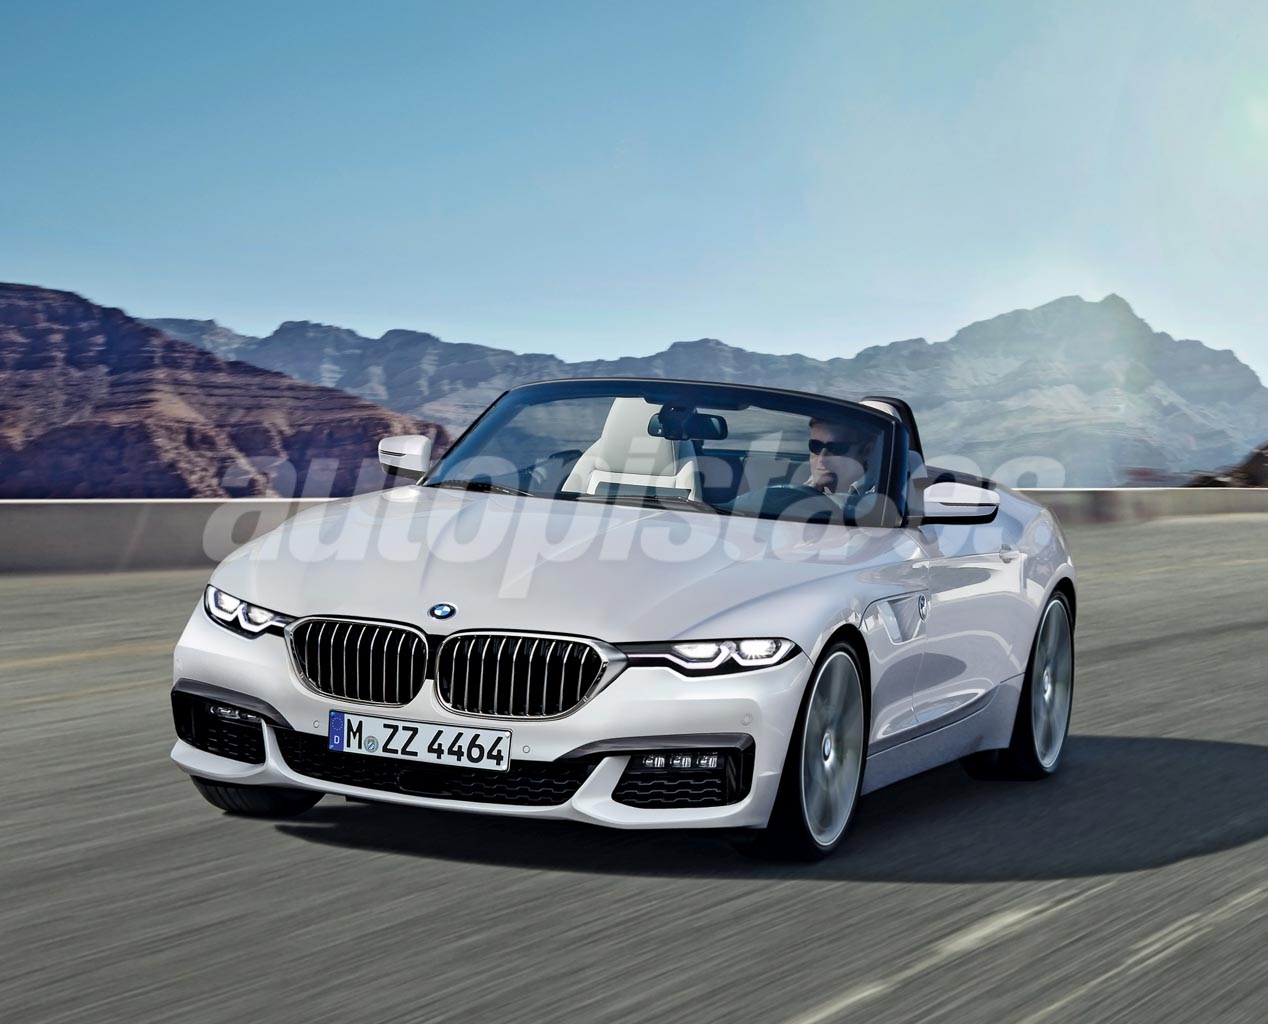 Objectif 2020: BMW renouvellera toute sa gamme de voitures